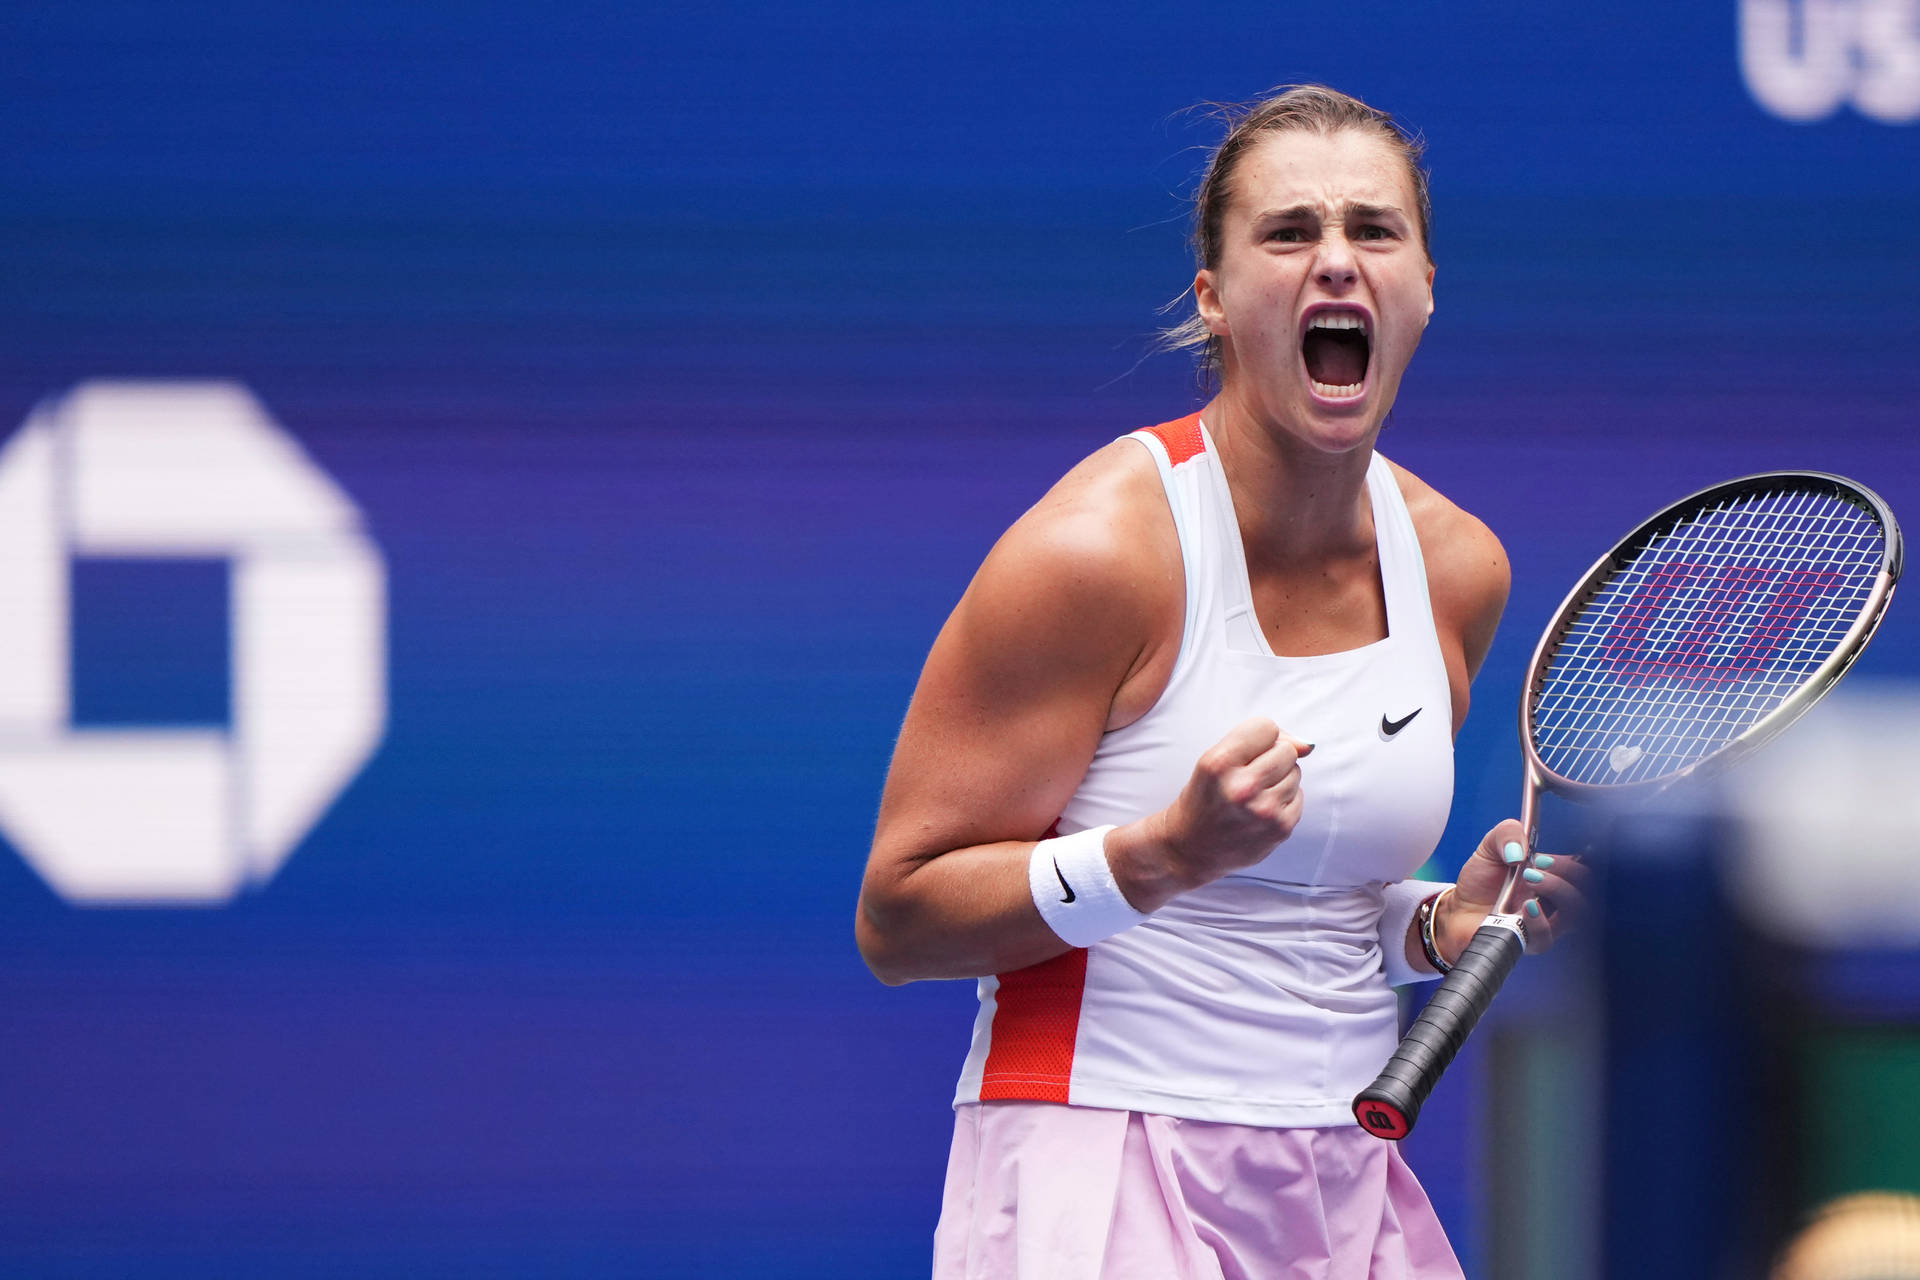 Caption: Aryna Sabalenka expressing intensity on the tennis court. Wallpaper